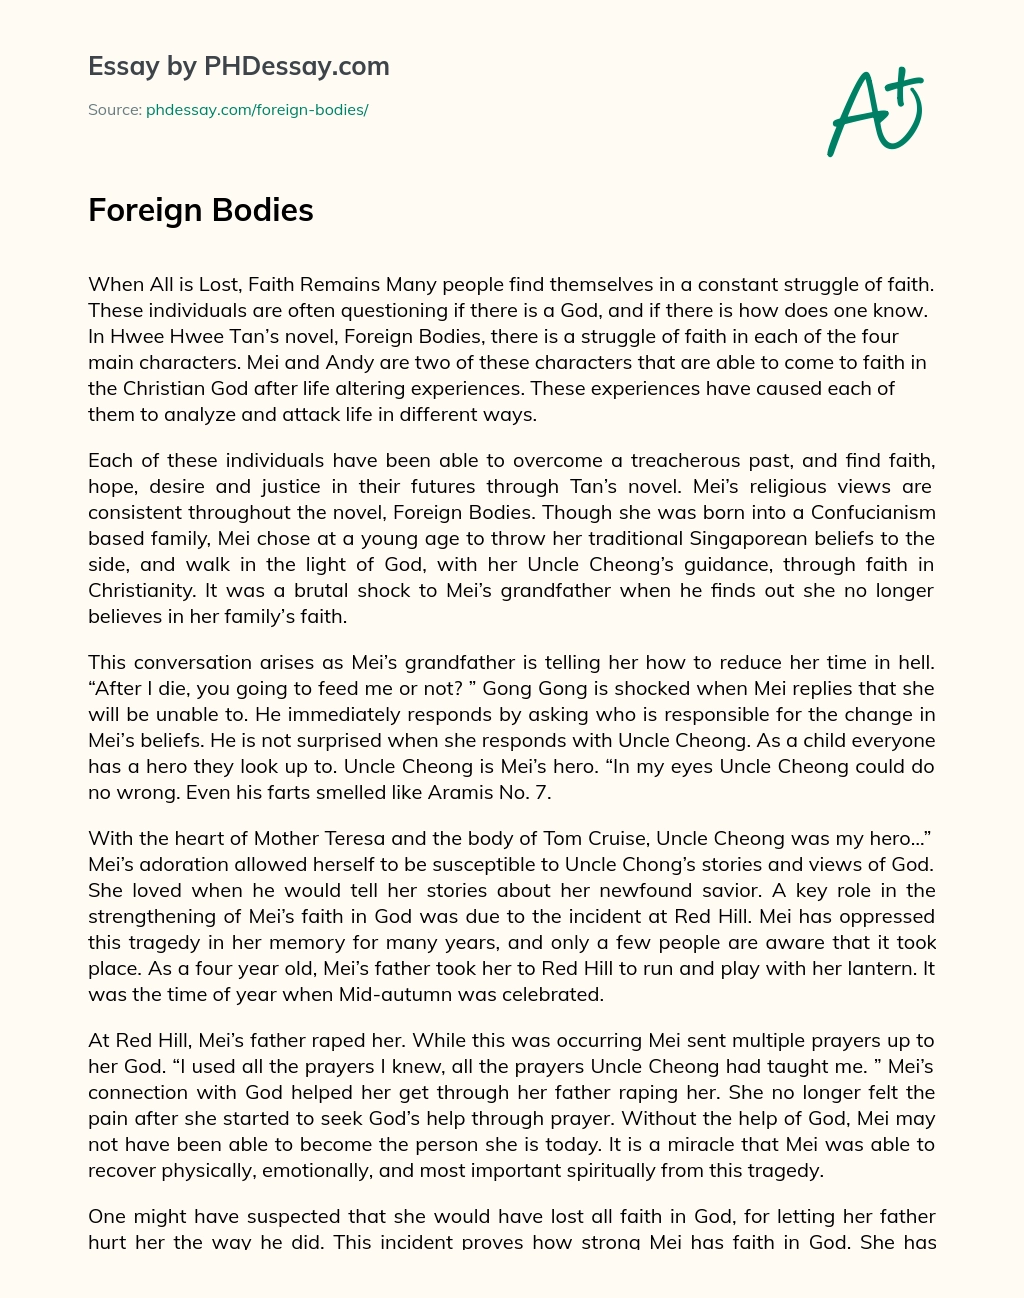 Foreign Bodies essay